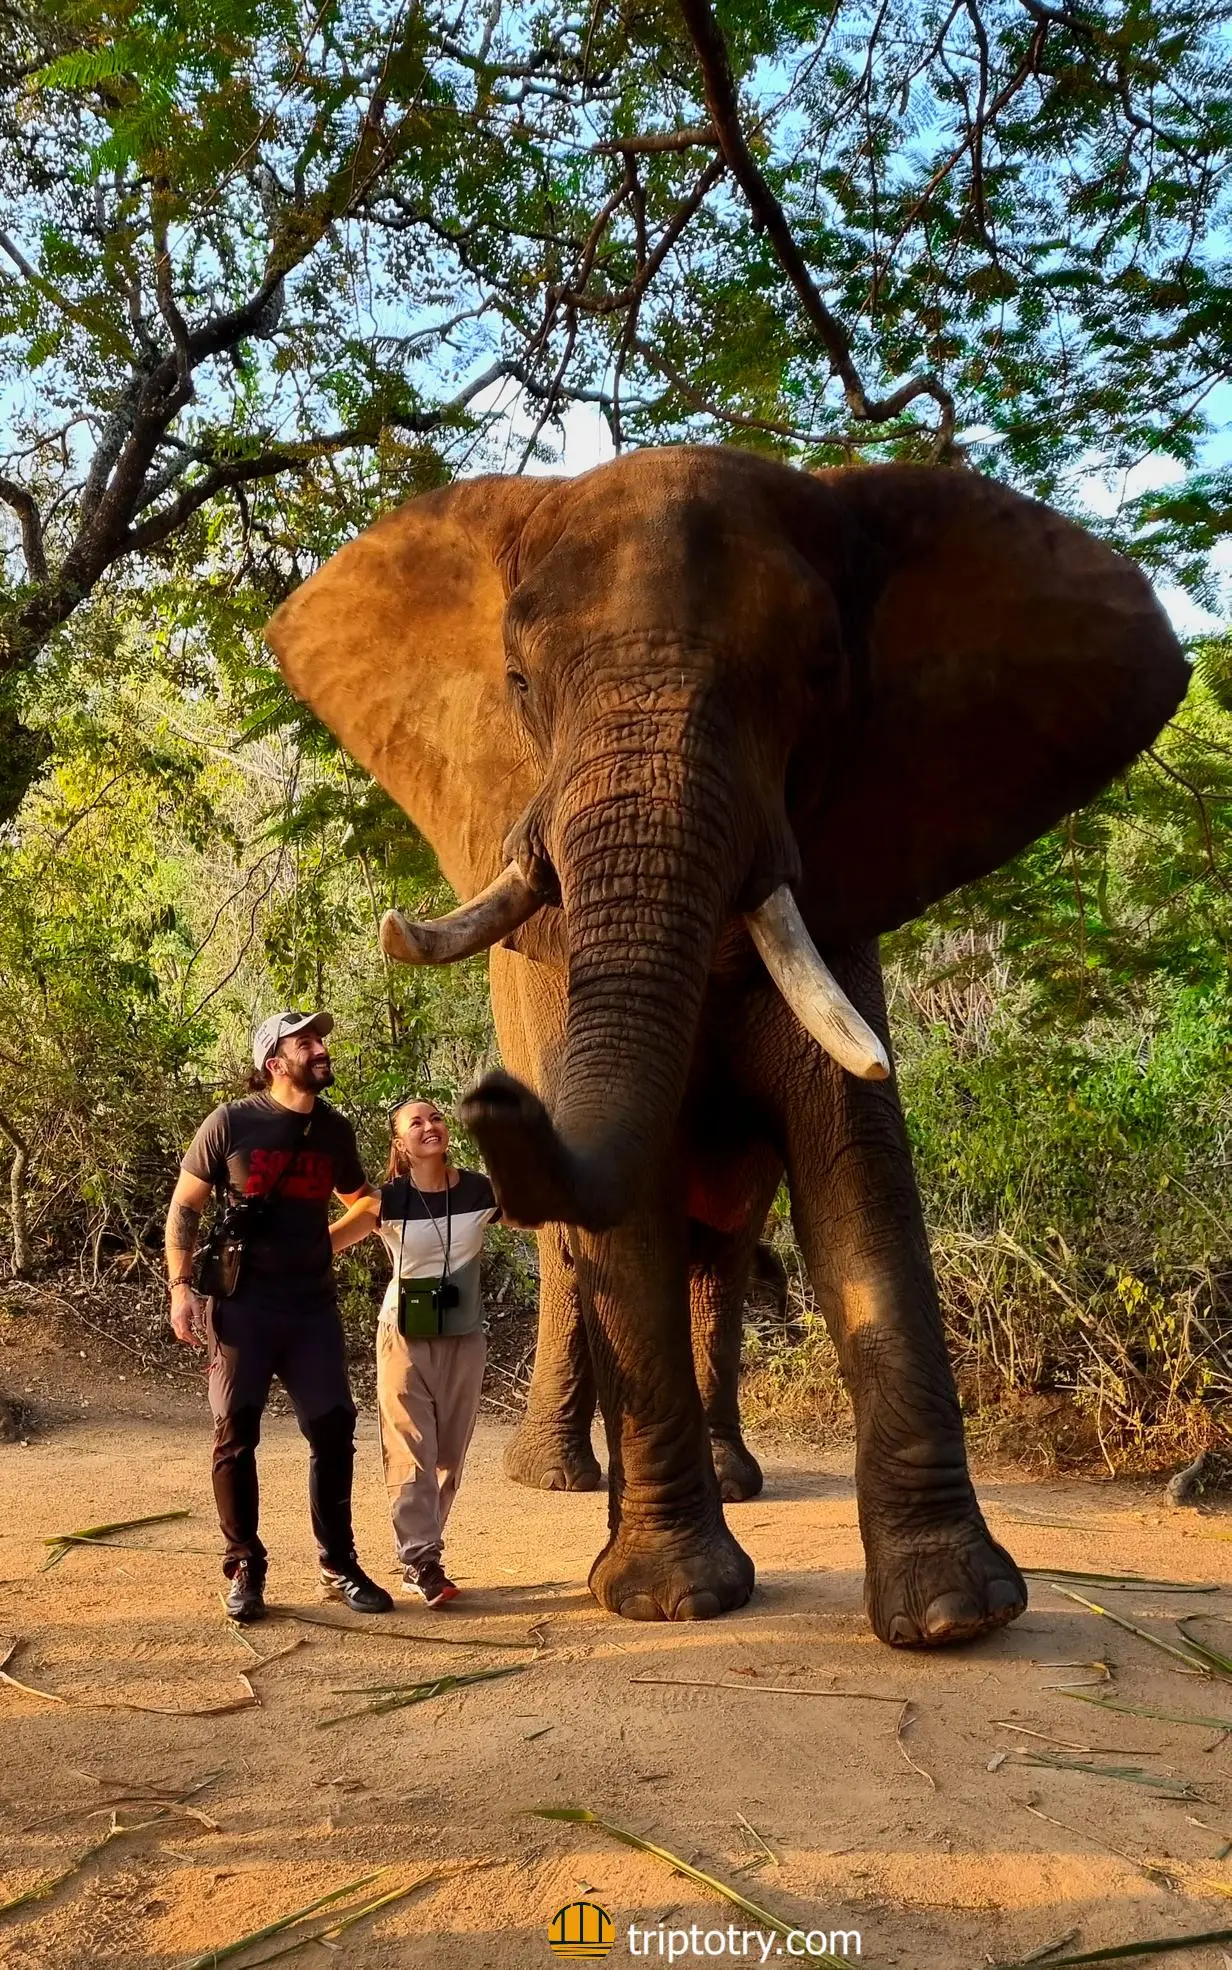 Viaggio in Sudafrica fai da te - Elephant Whispers in Sudafrica - South Africa DIY